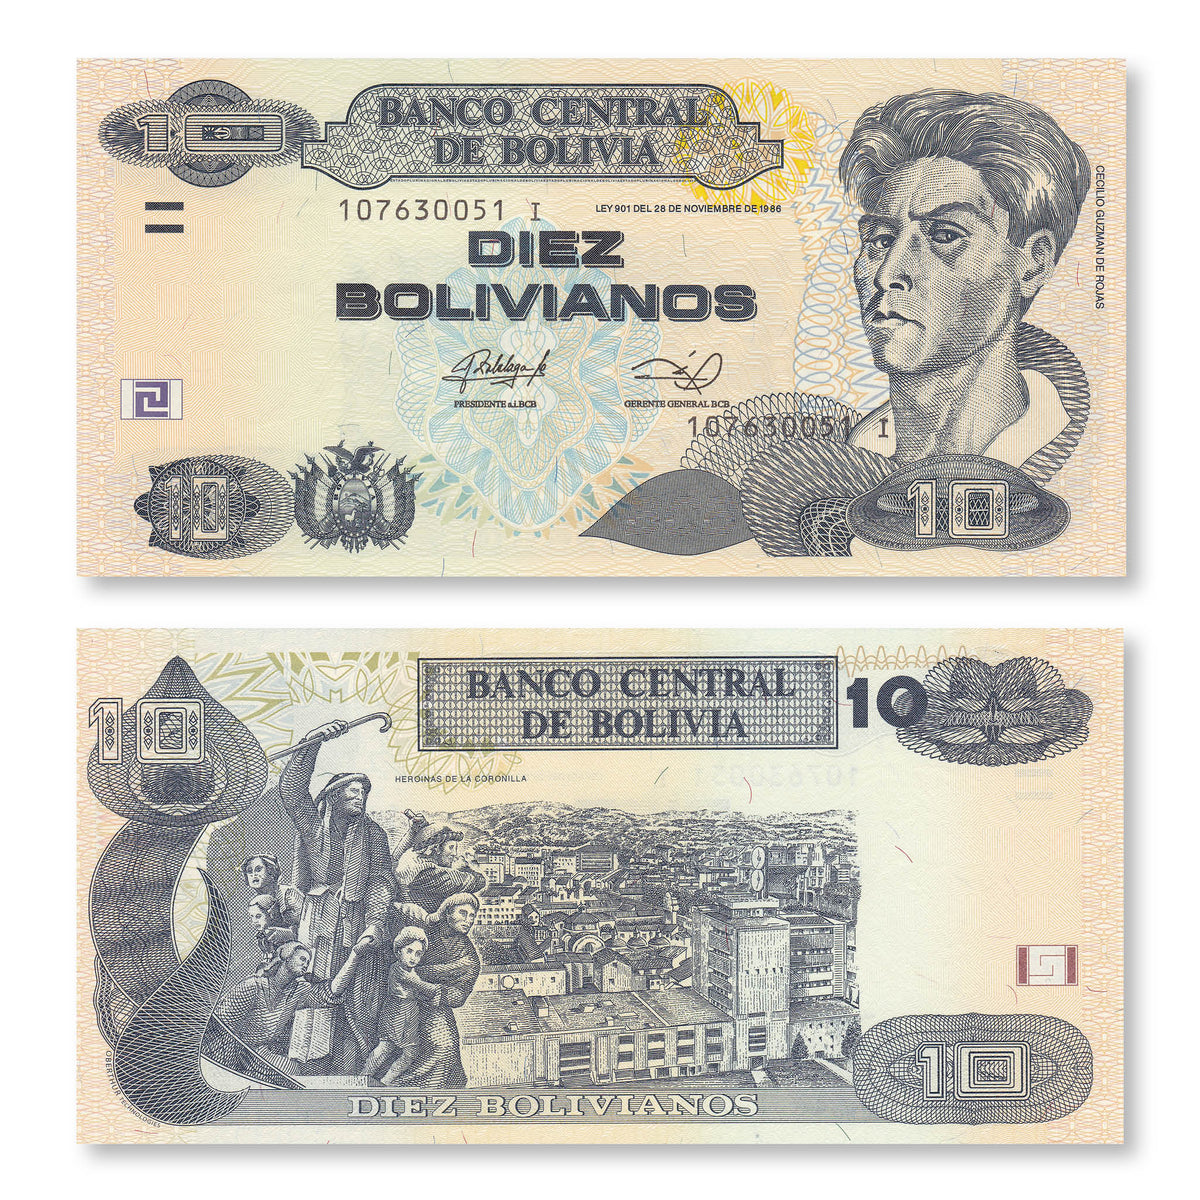 Bolivia 10 Bolivianos, 2013, B412d, P238A, UNC - Robert's World Money - World Banknotes